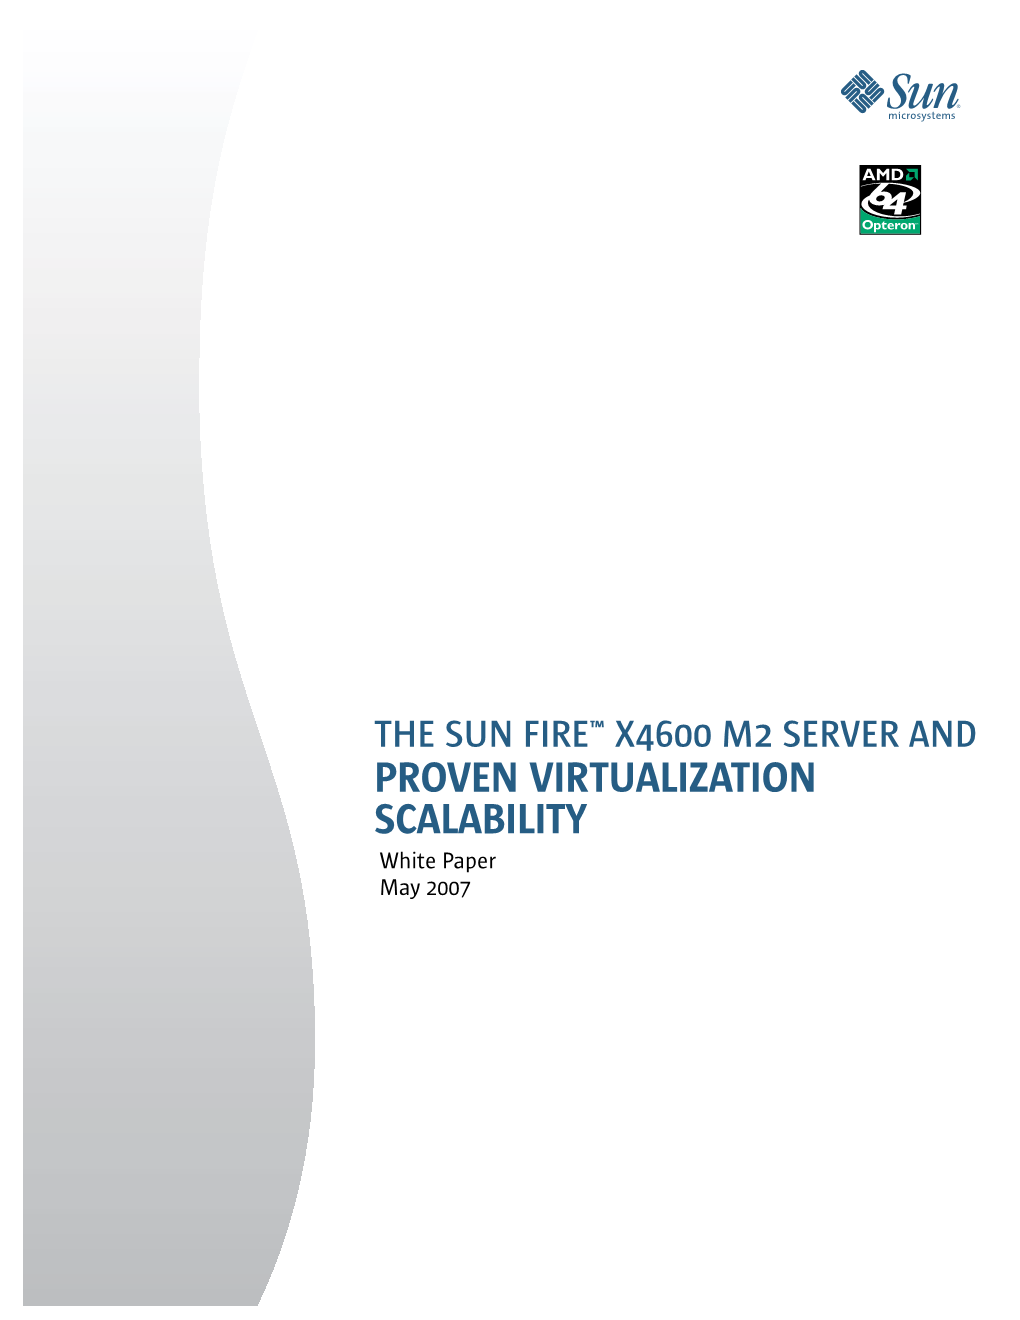 The Sun Fire X4600 M2 Server and Proven Virtualization Scalability on the Web Sun.Com/X64